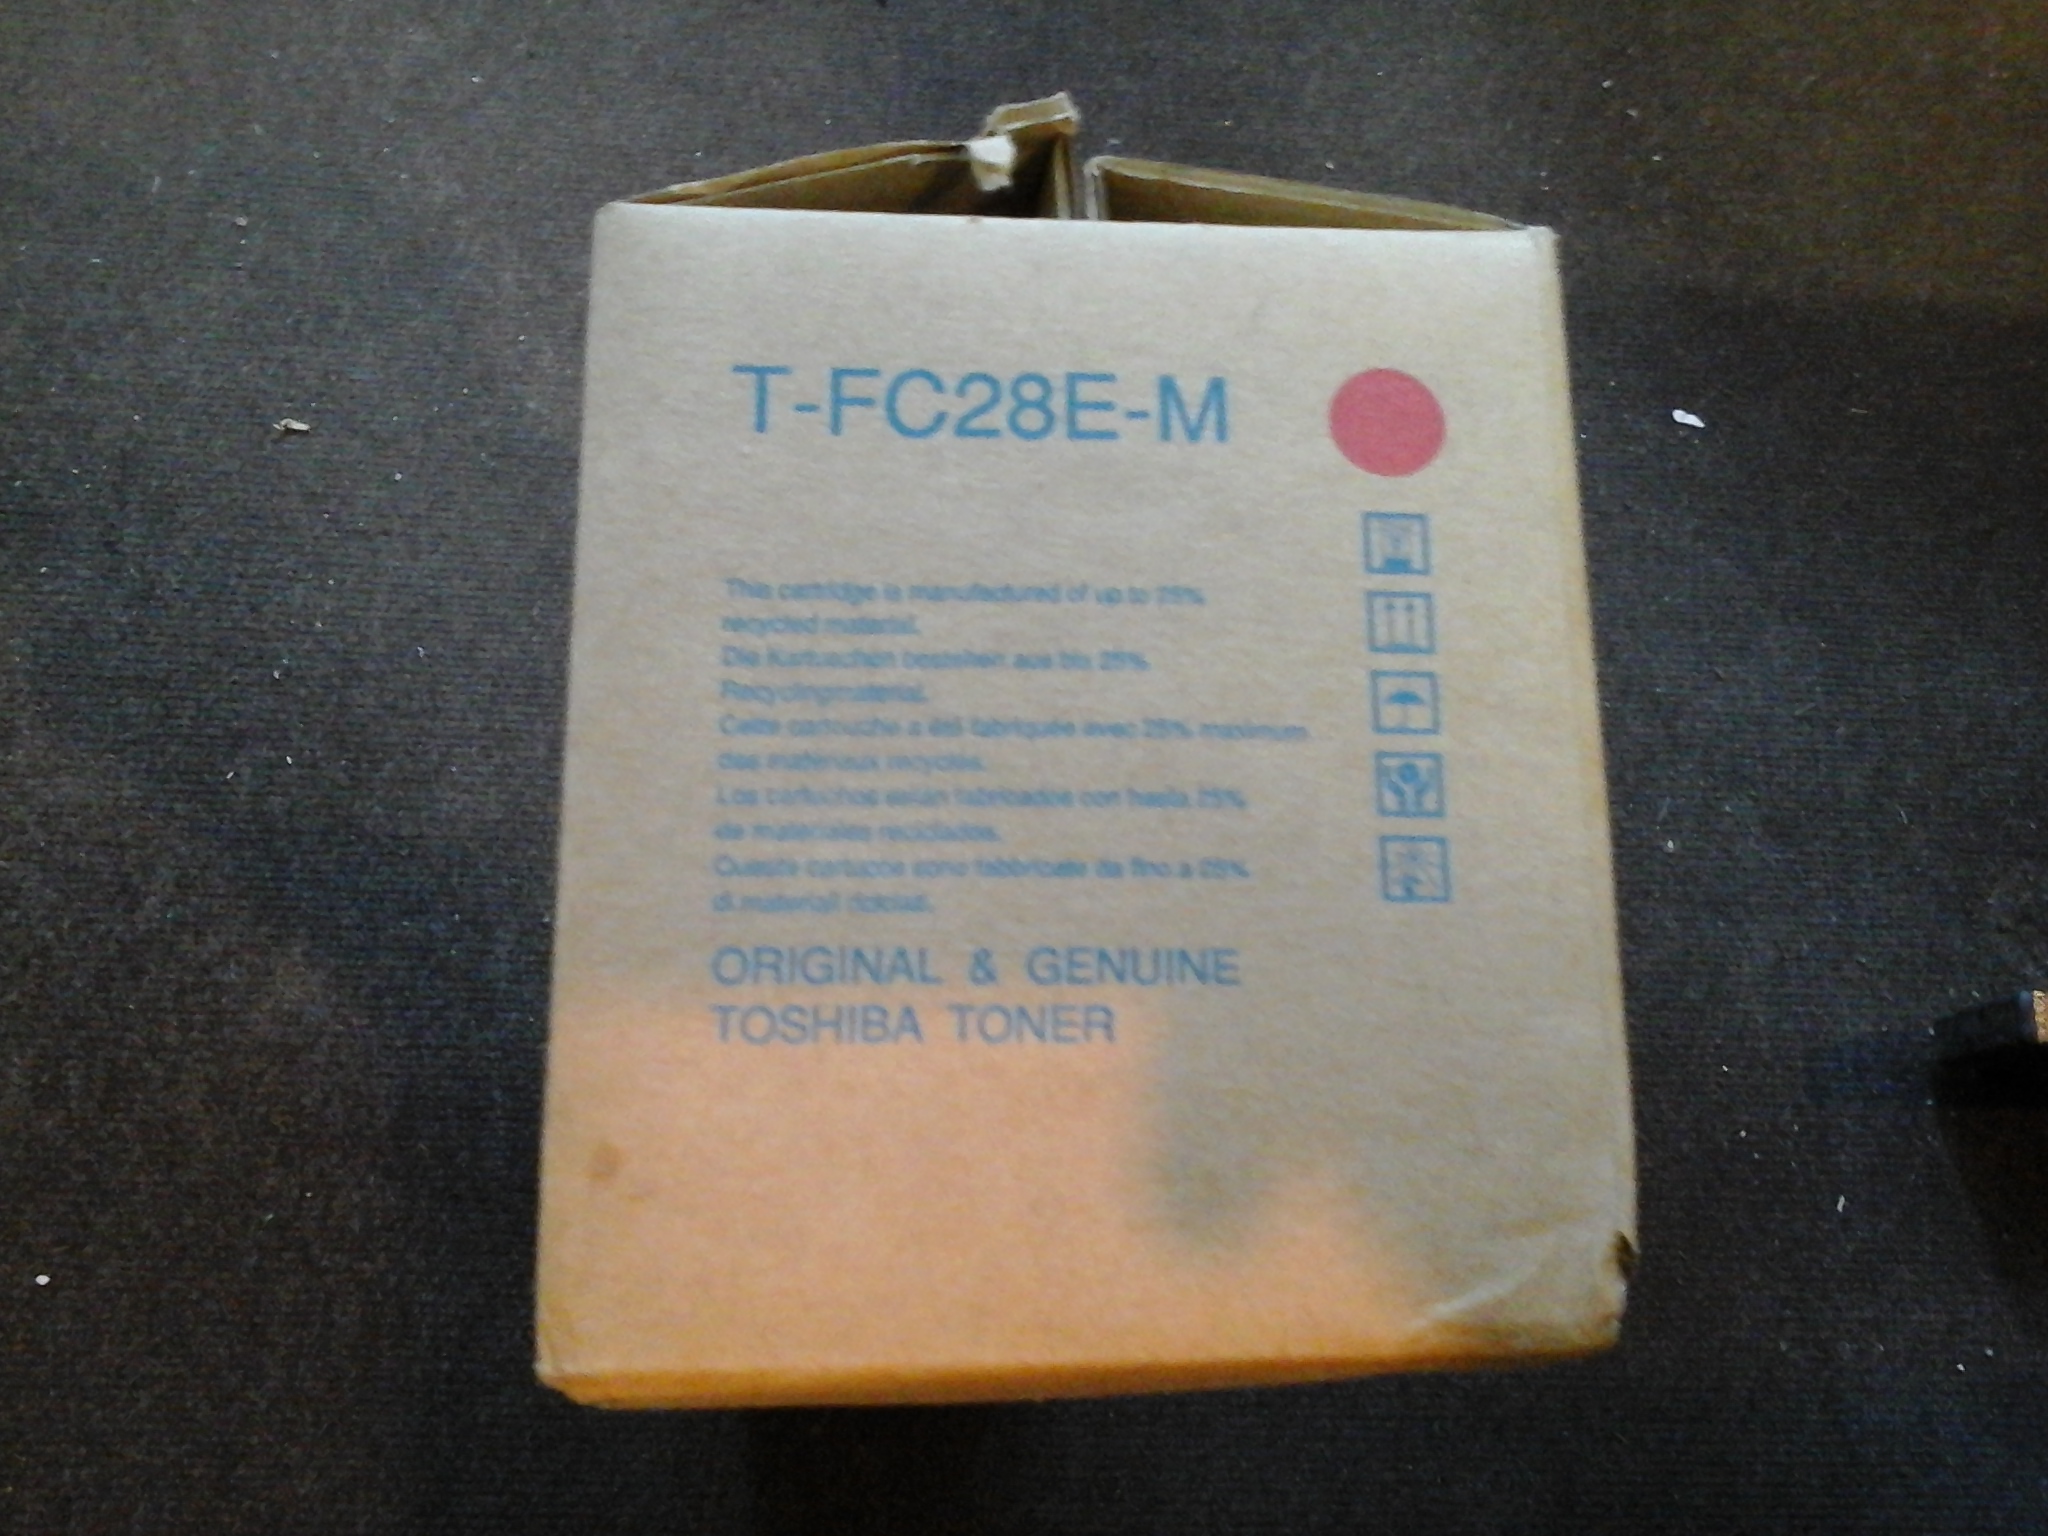 Genuine Toshiba Toner Cartridge Magenta T-FC28E-M Open VAT Included - Picture 1 of 1